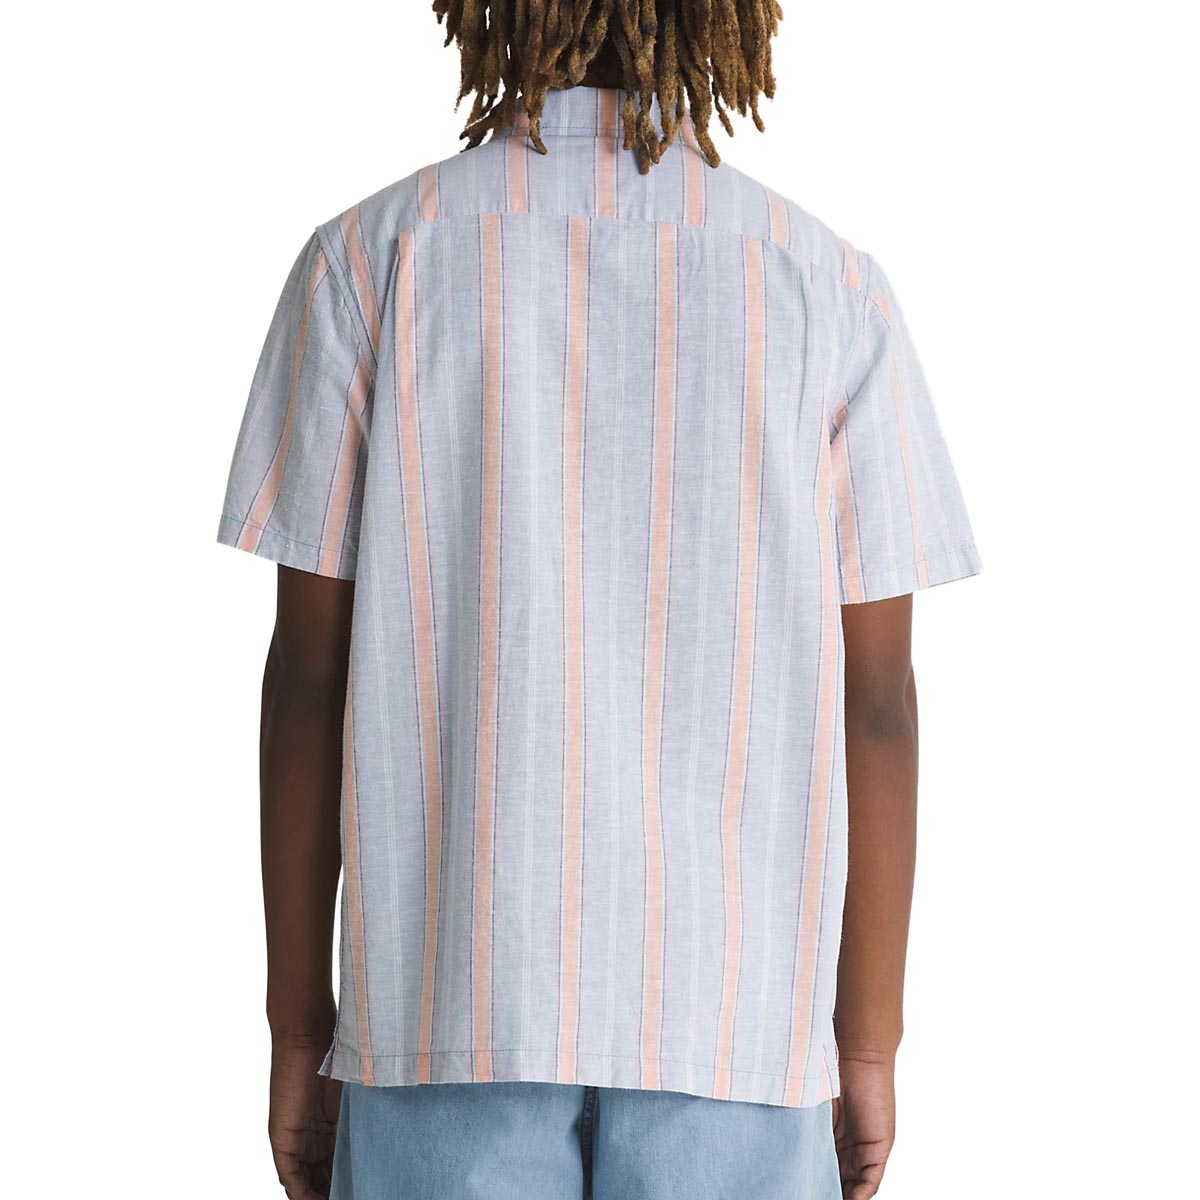 Vans Carnell Shirt - Dusty Blue/Copper Tan image 2